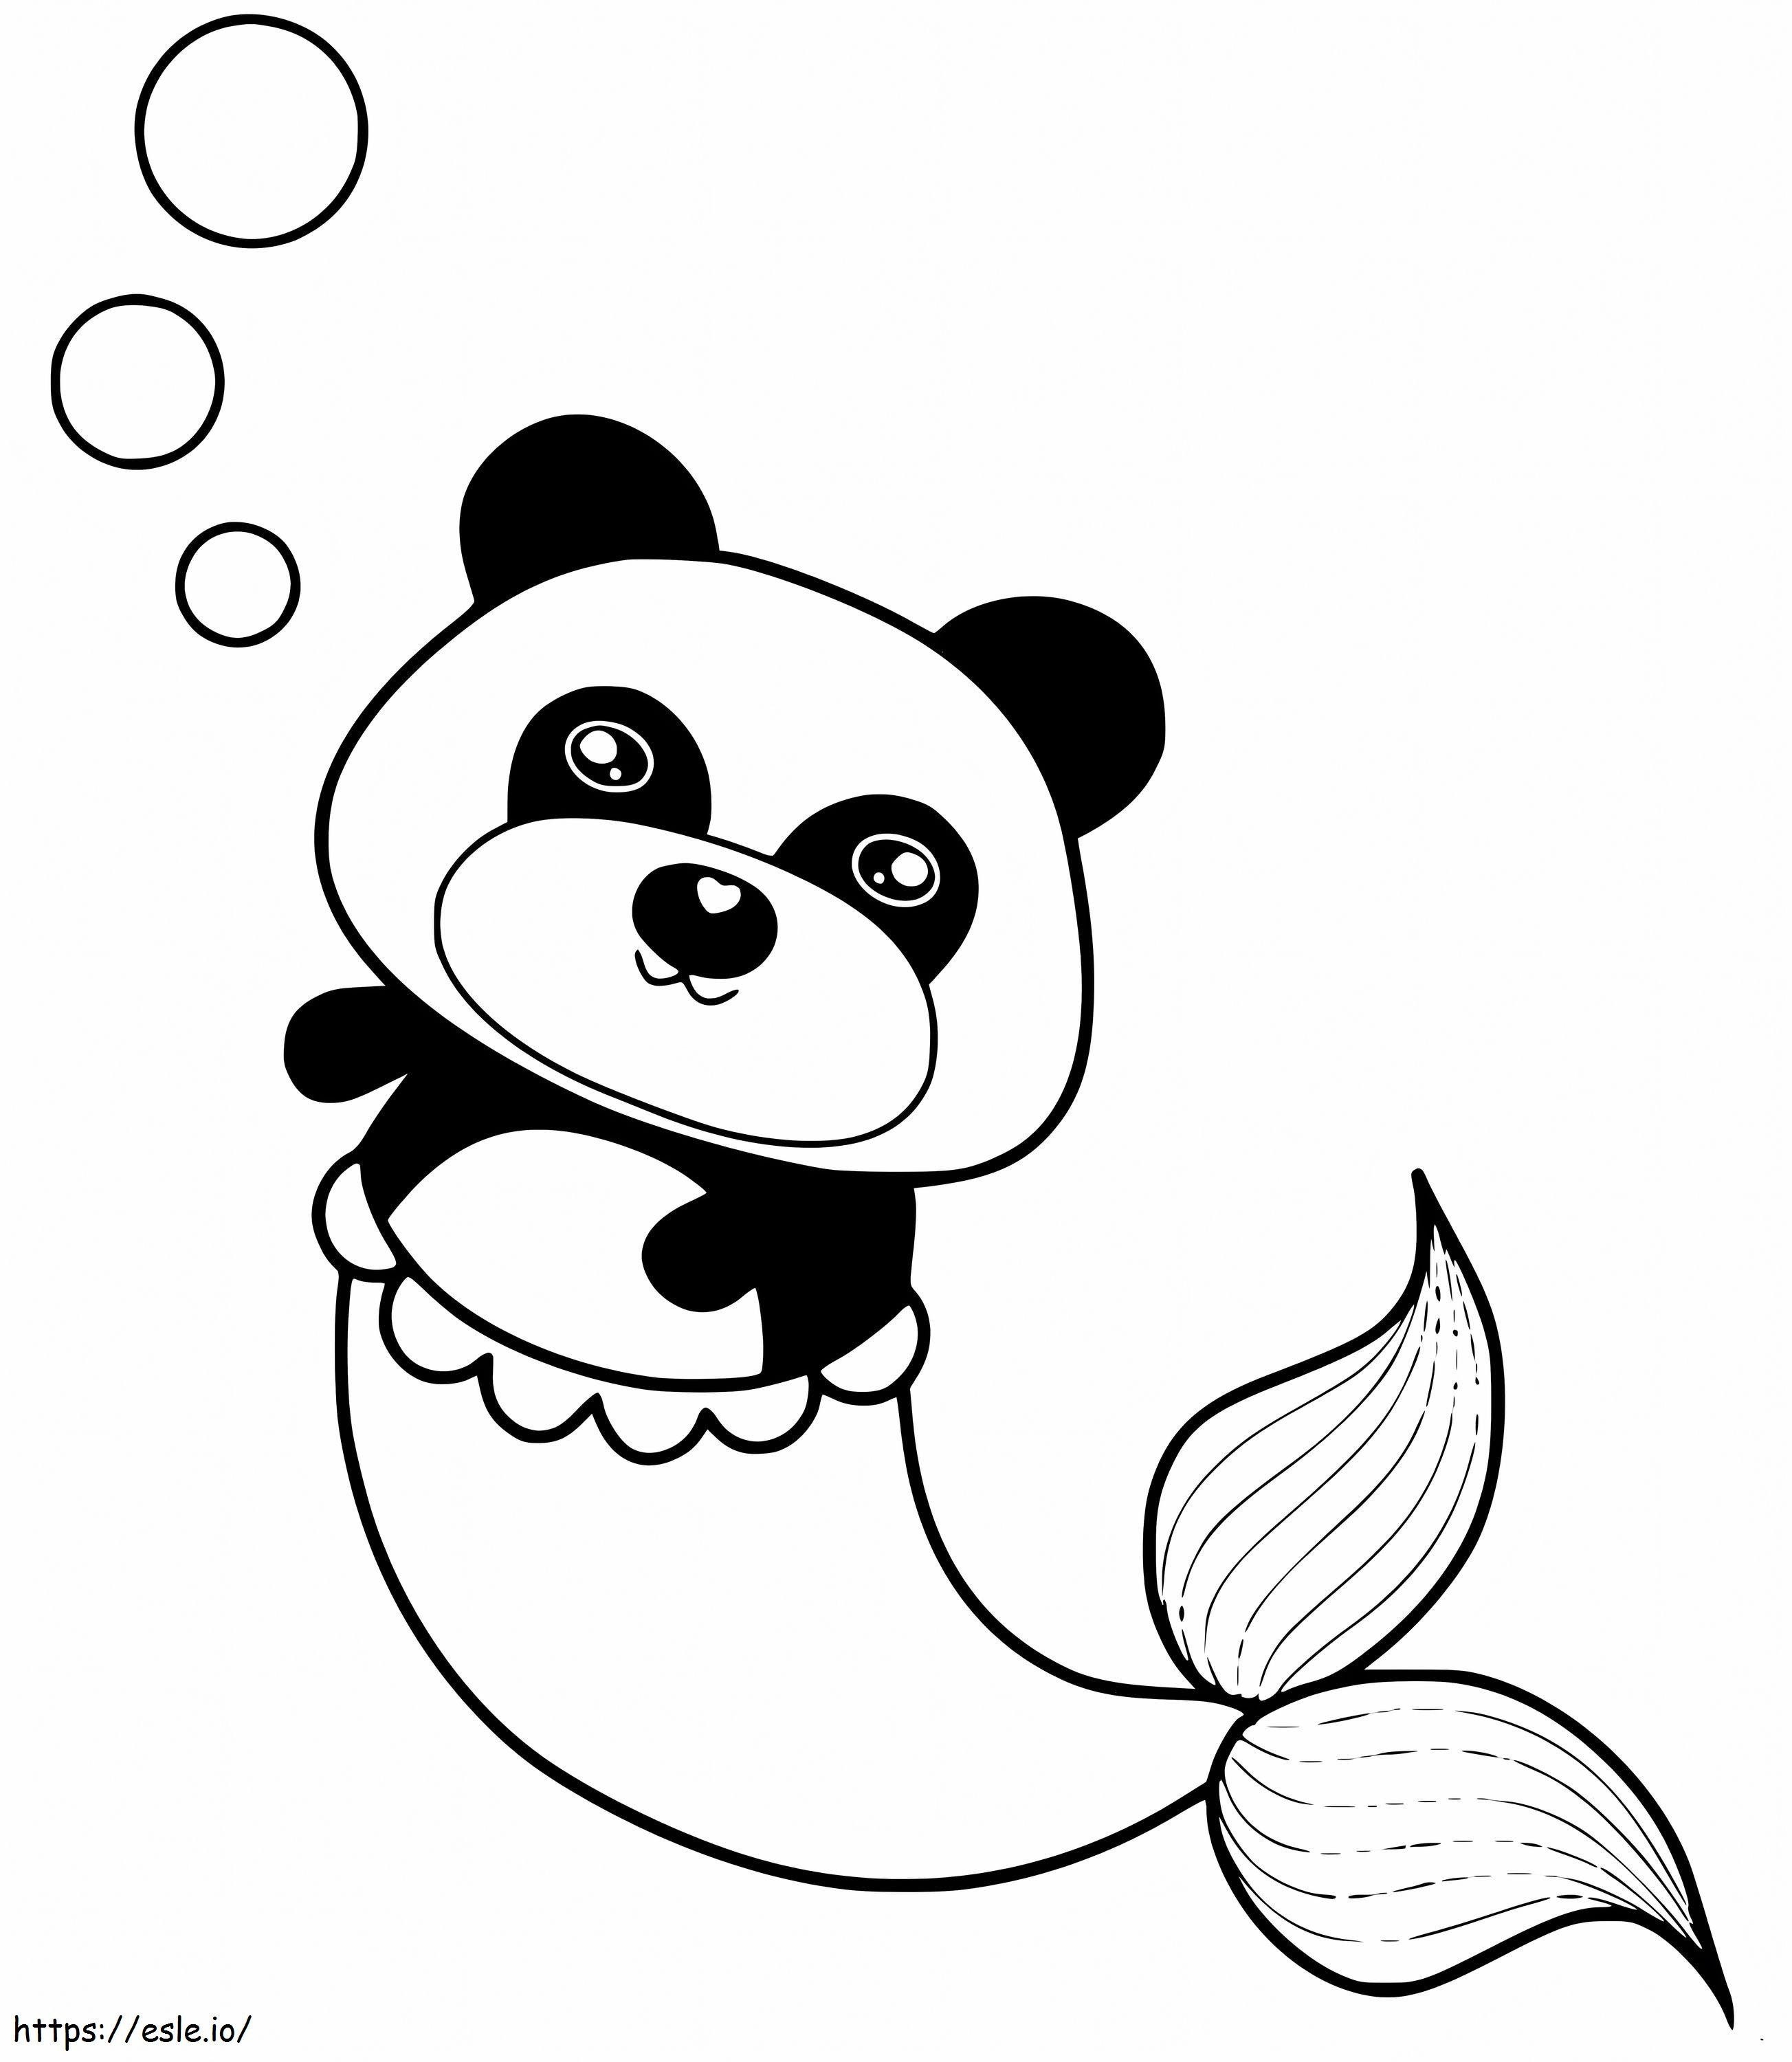 Sirena Panda 1 para colorear